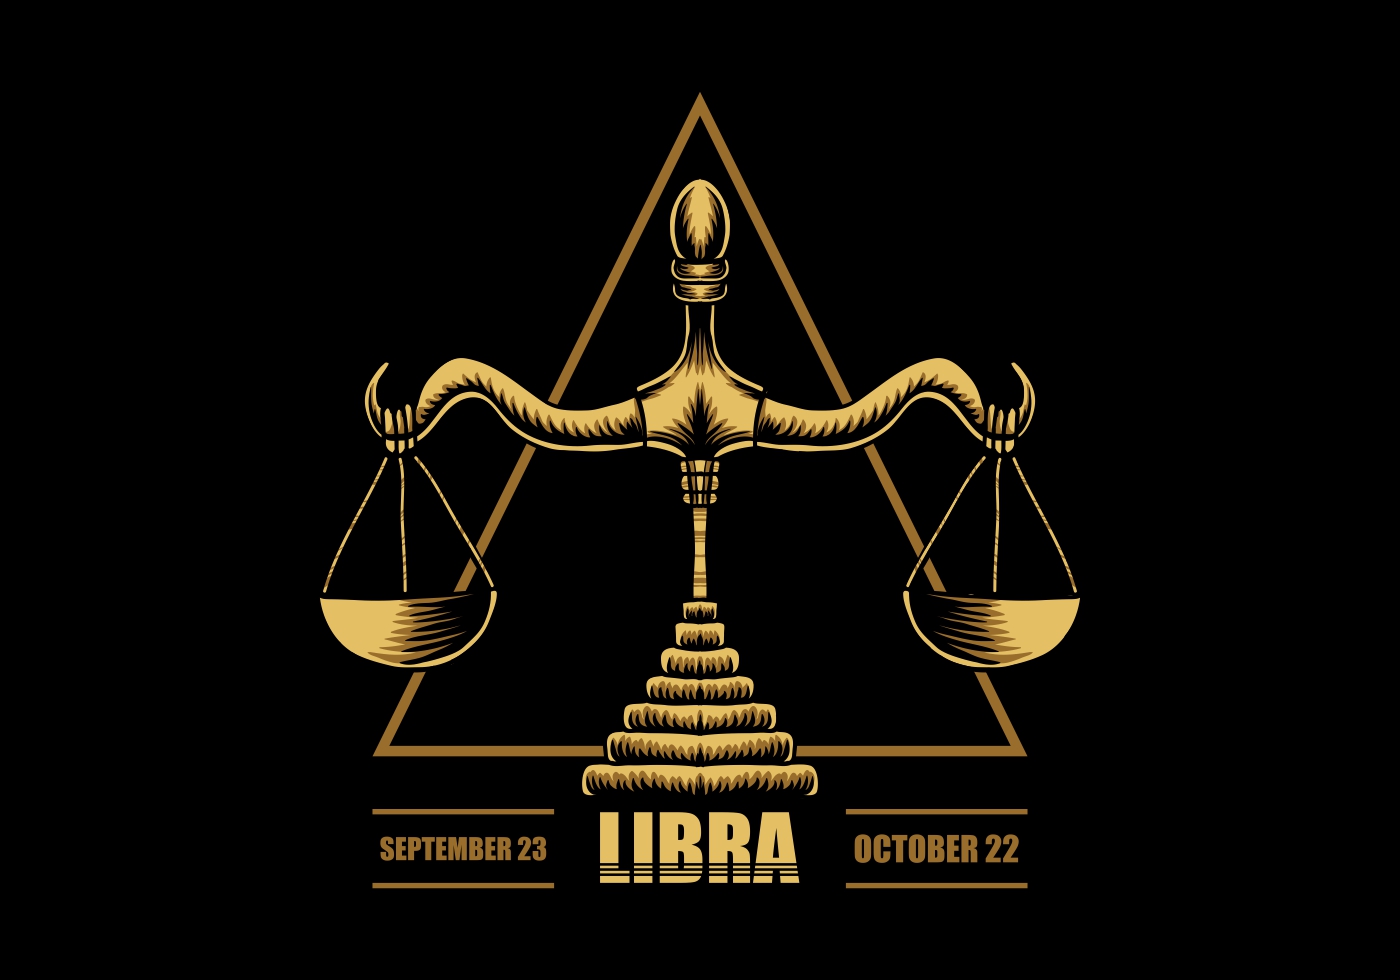 Ramalan keuangan zodiak Juni 2020 - Libra